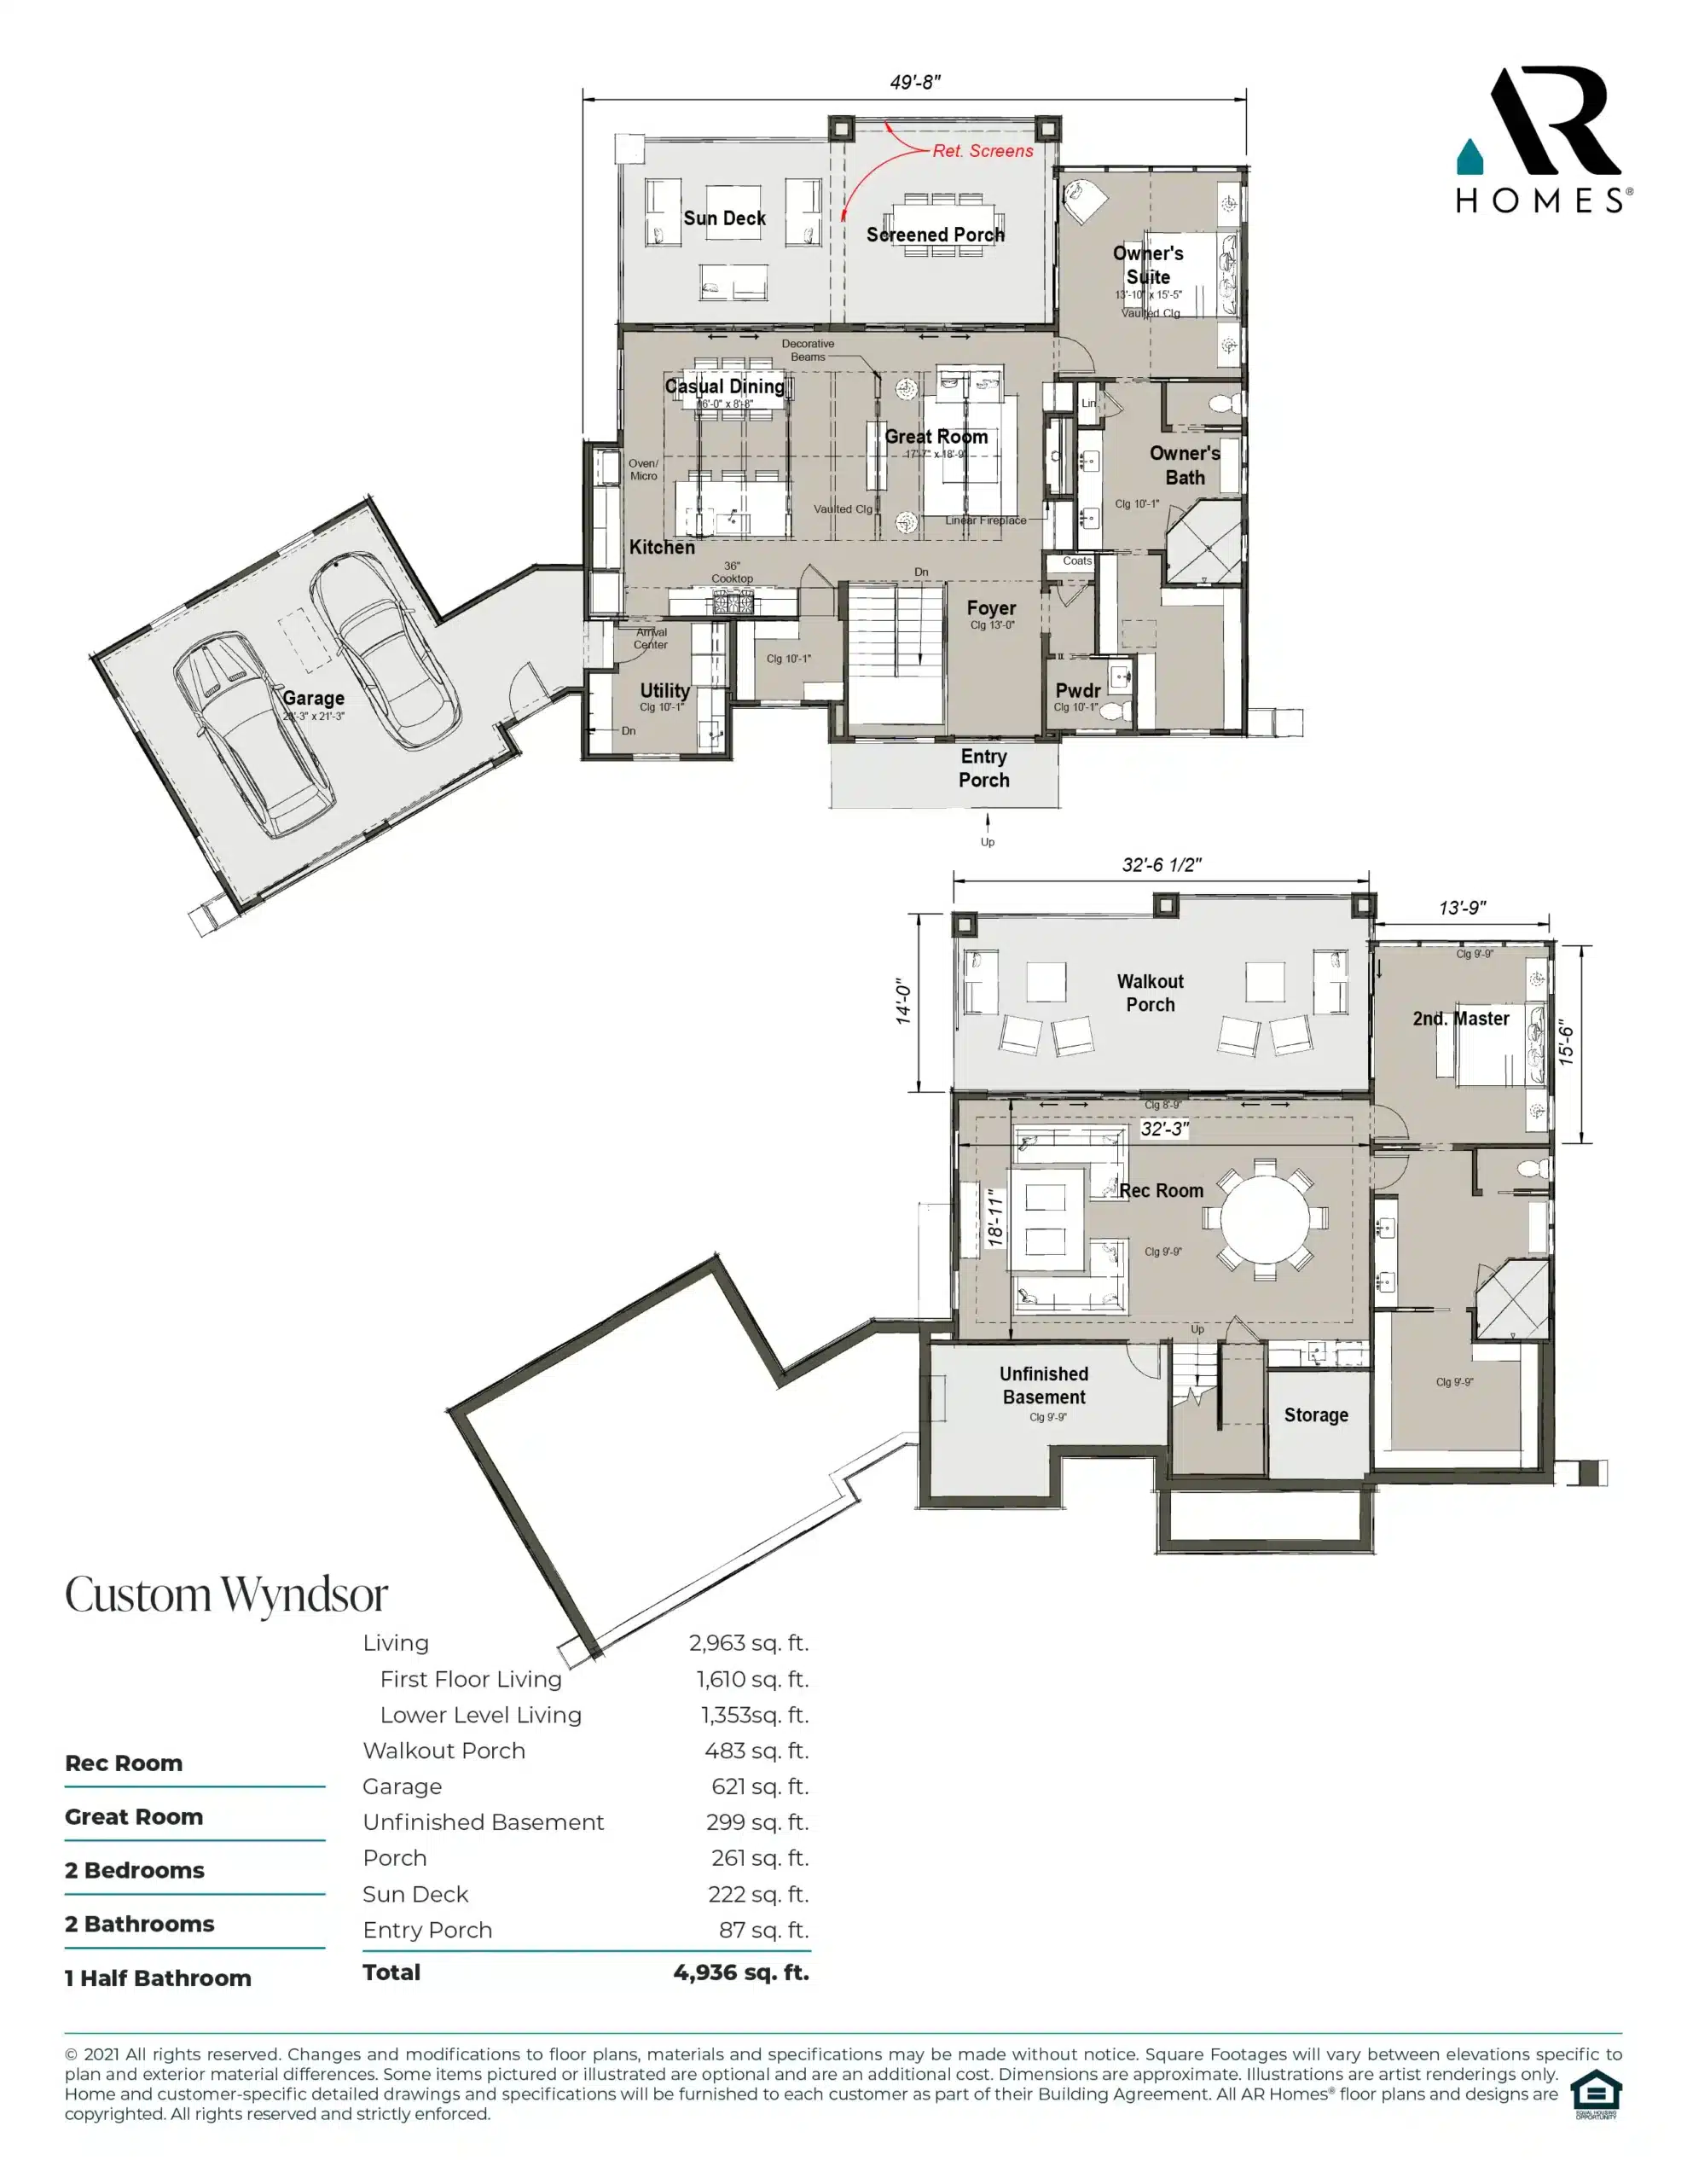 Customized Wyndsor Home Plan